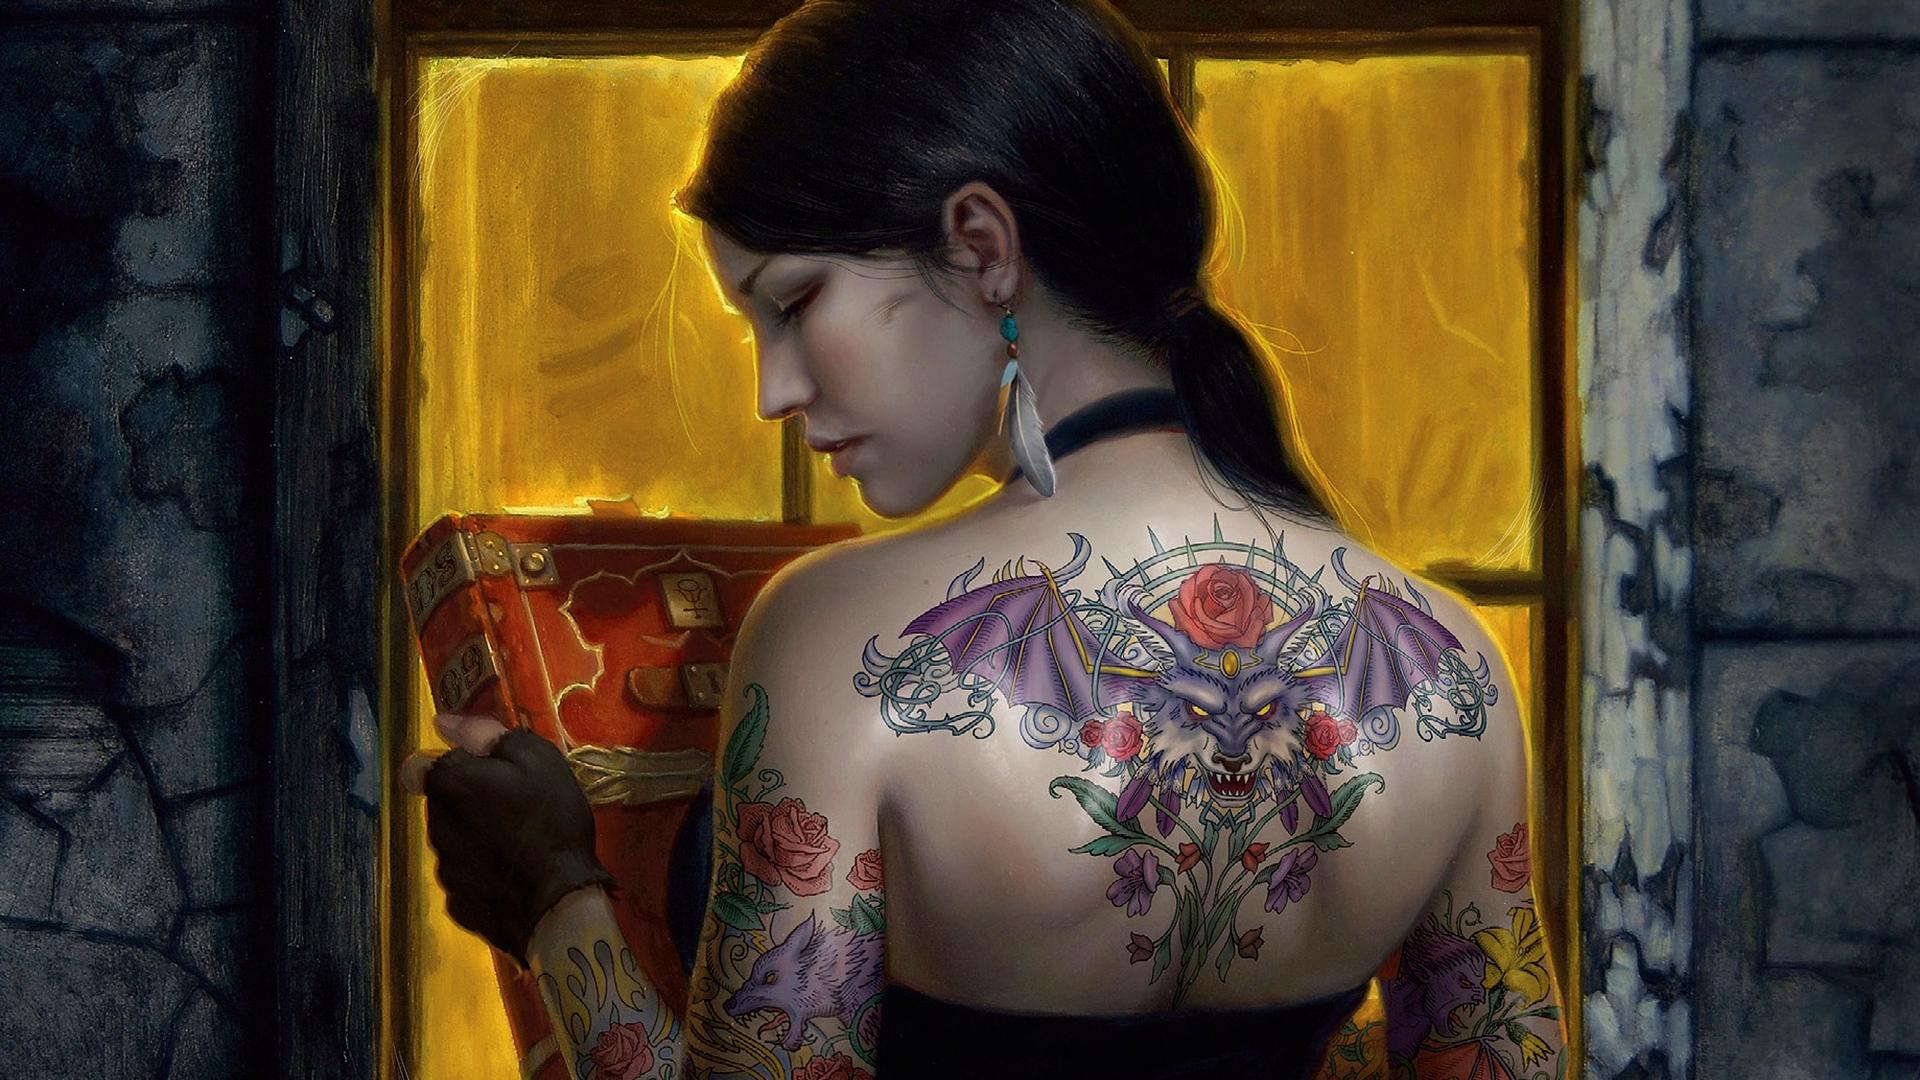 43+] Tattoo Girl Wallpaper HD - WallpaperSafari